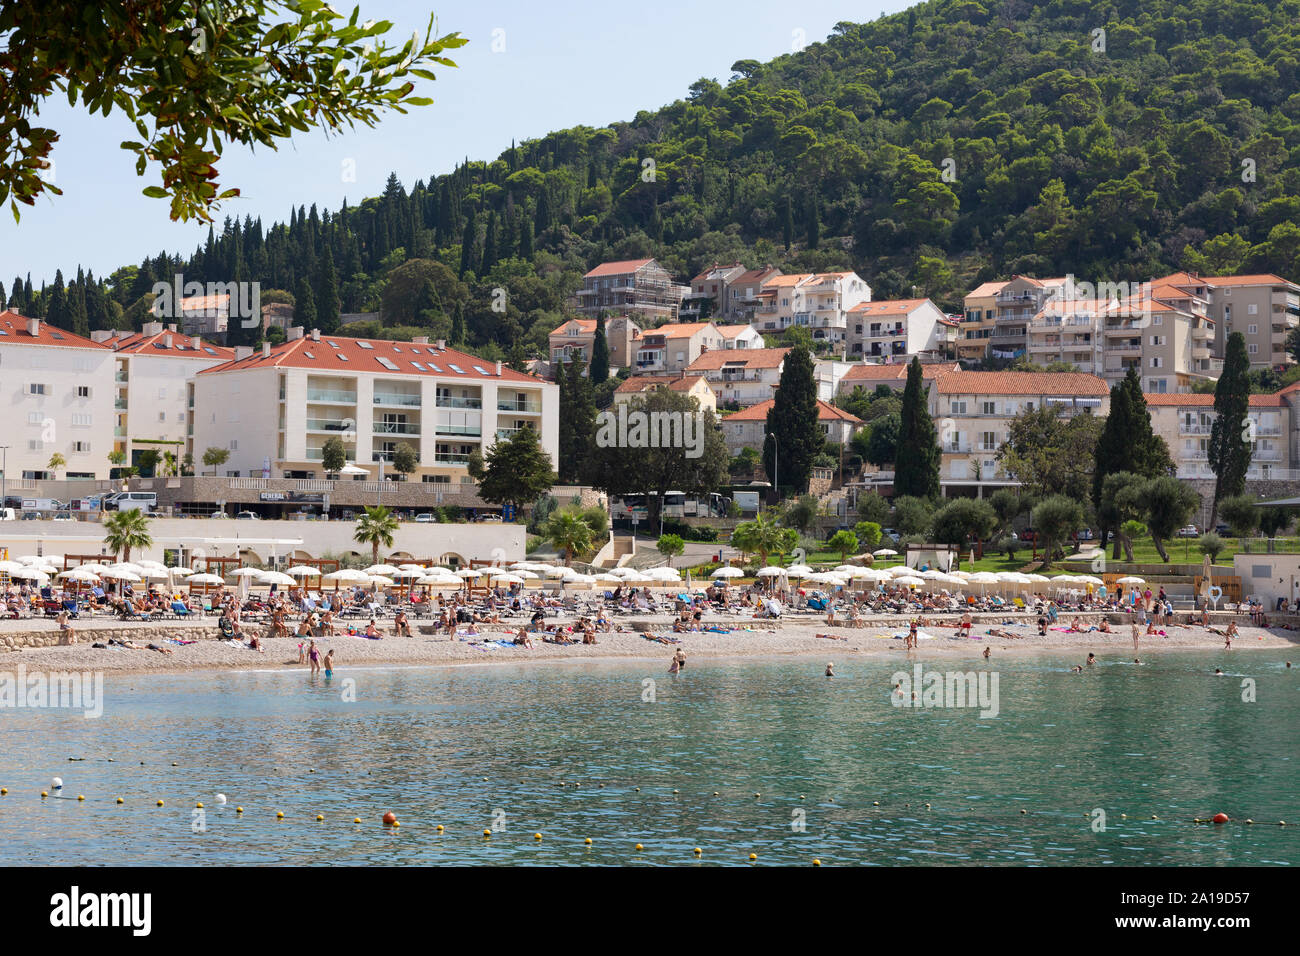 Croatia beach; Tourists sunbathing on Sunset Beach just outside the old town, Dalmatian coast at Dubrovnik Croatia Europe Stock Photo